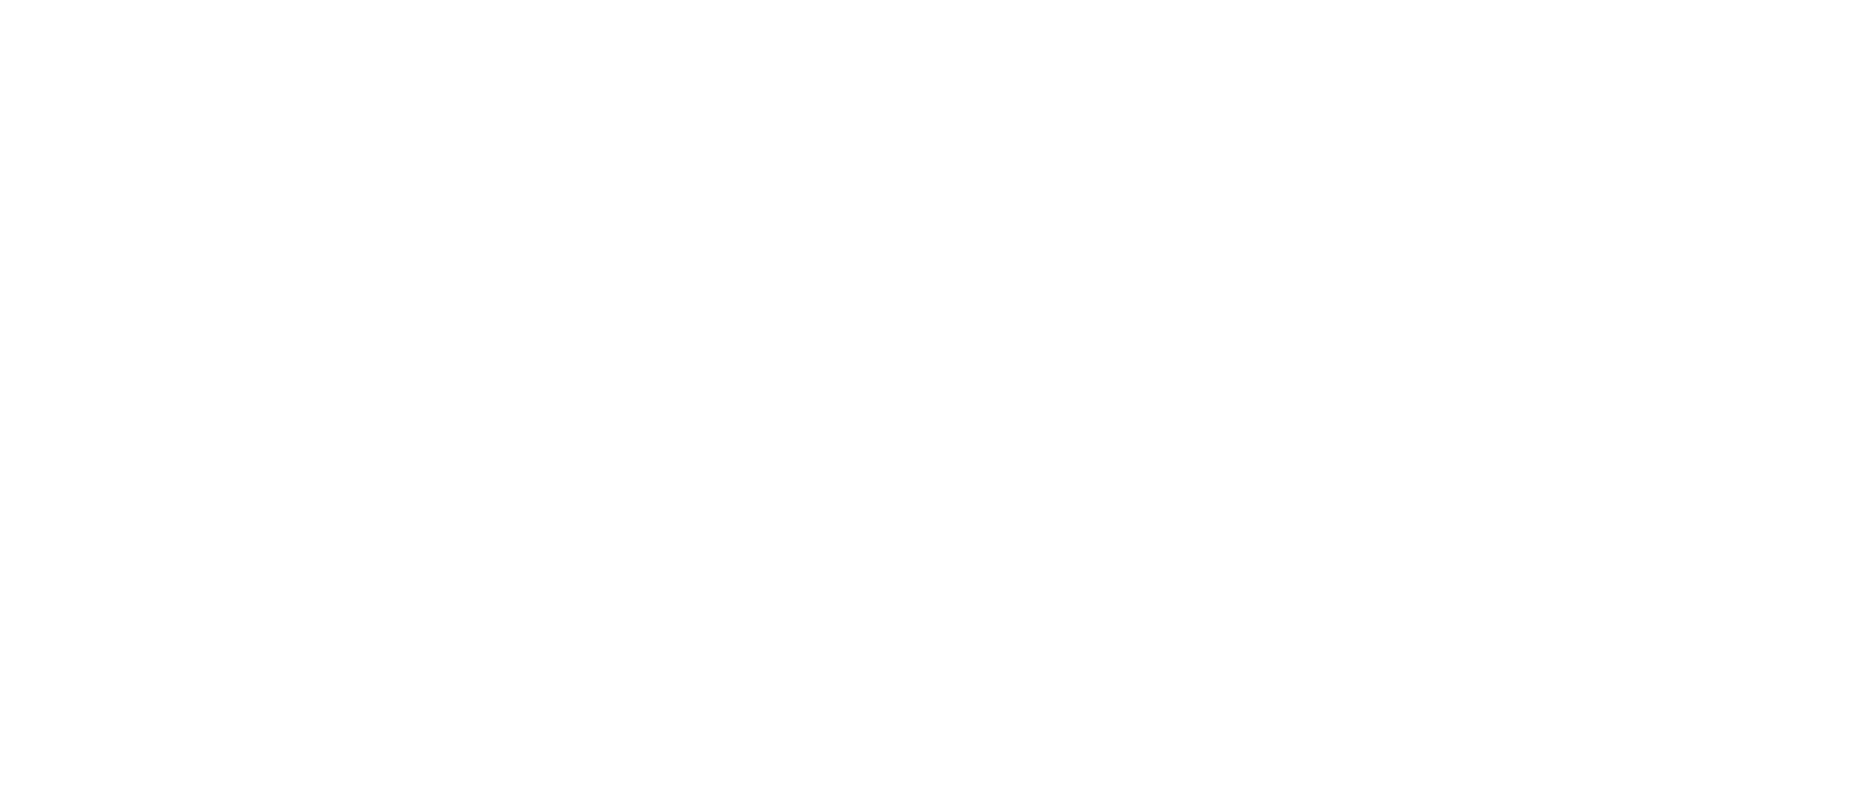 CM Zero Sugar Margarita